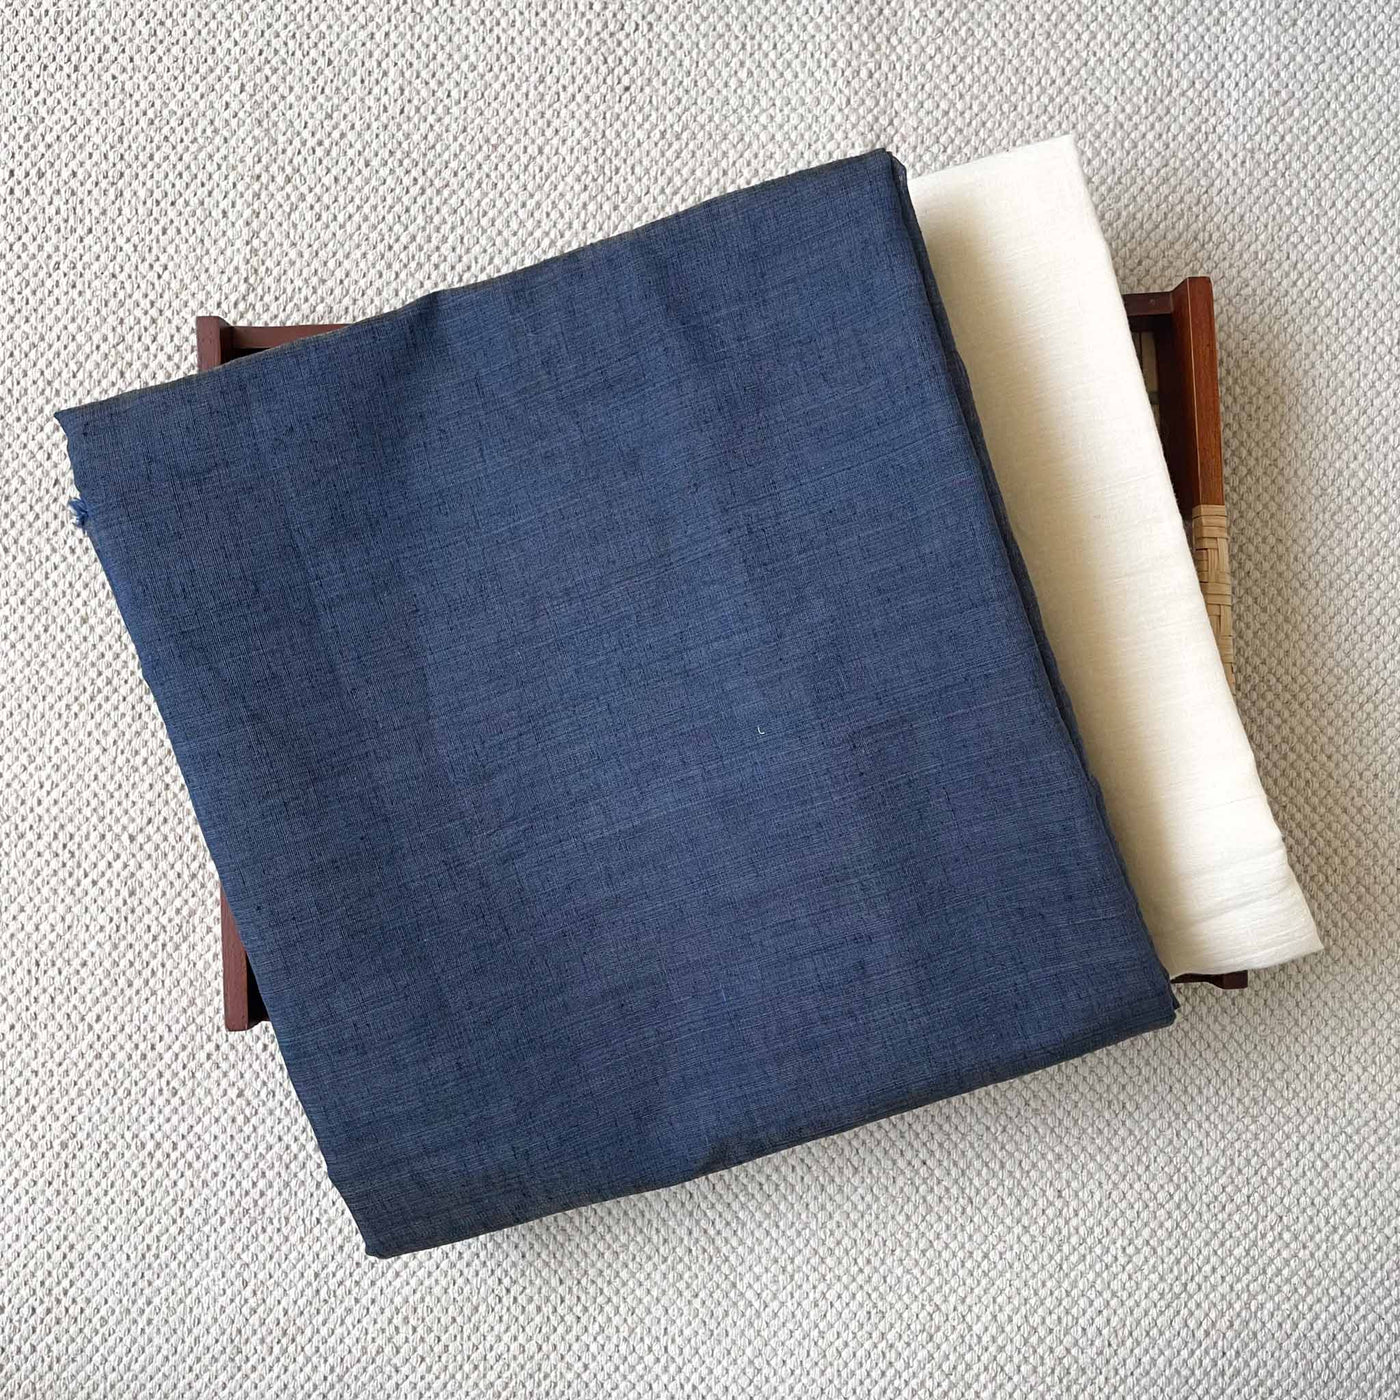 Fabric Pandit Kurta Set Unisex Dusty Blue Color | Blended Silk Linen Kurta Fabric (2.5 Meters) | and Cotton Pyjama (2.5 Meters) | Unstitched Combo Set